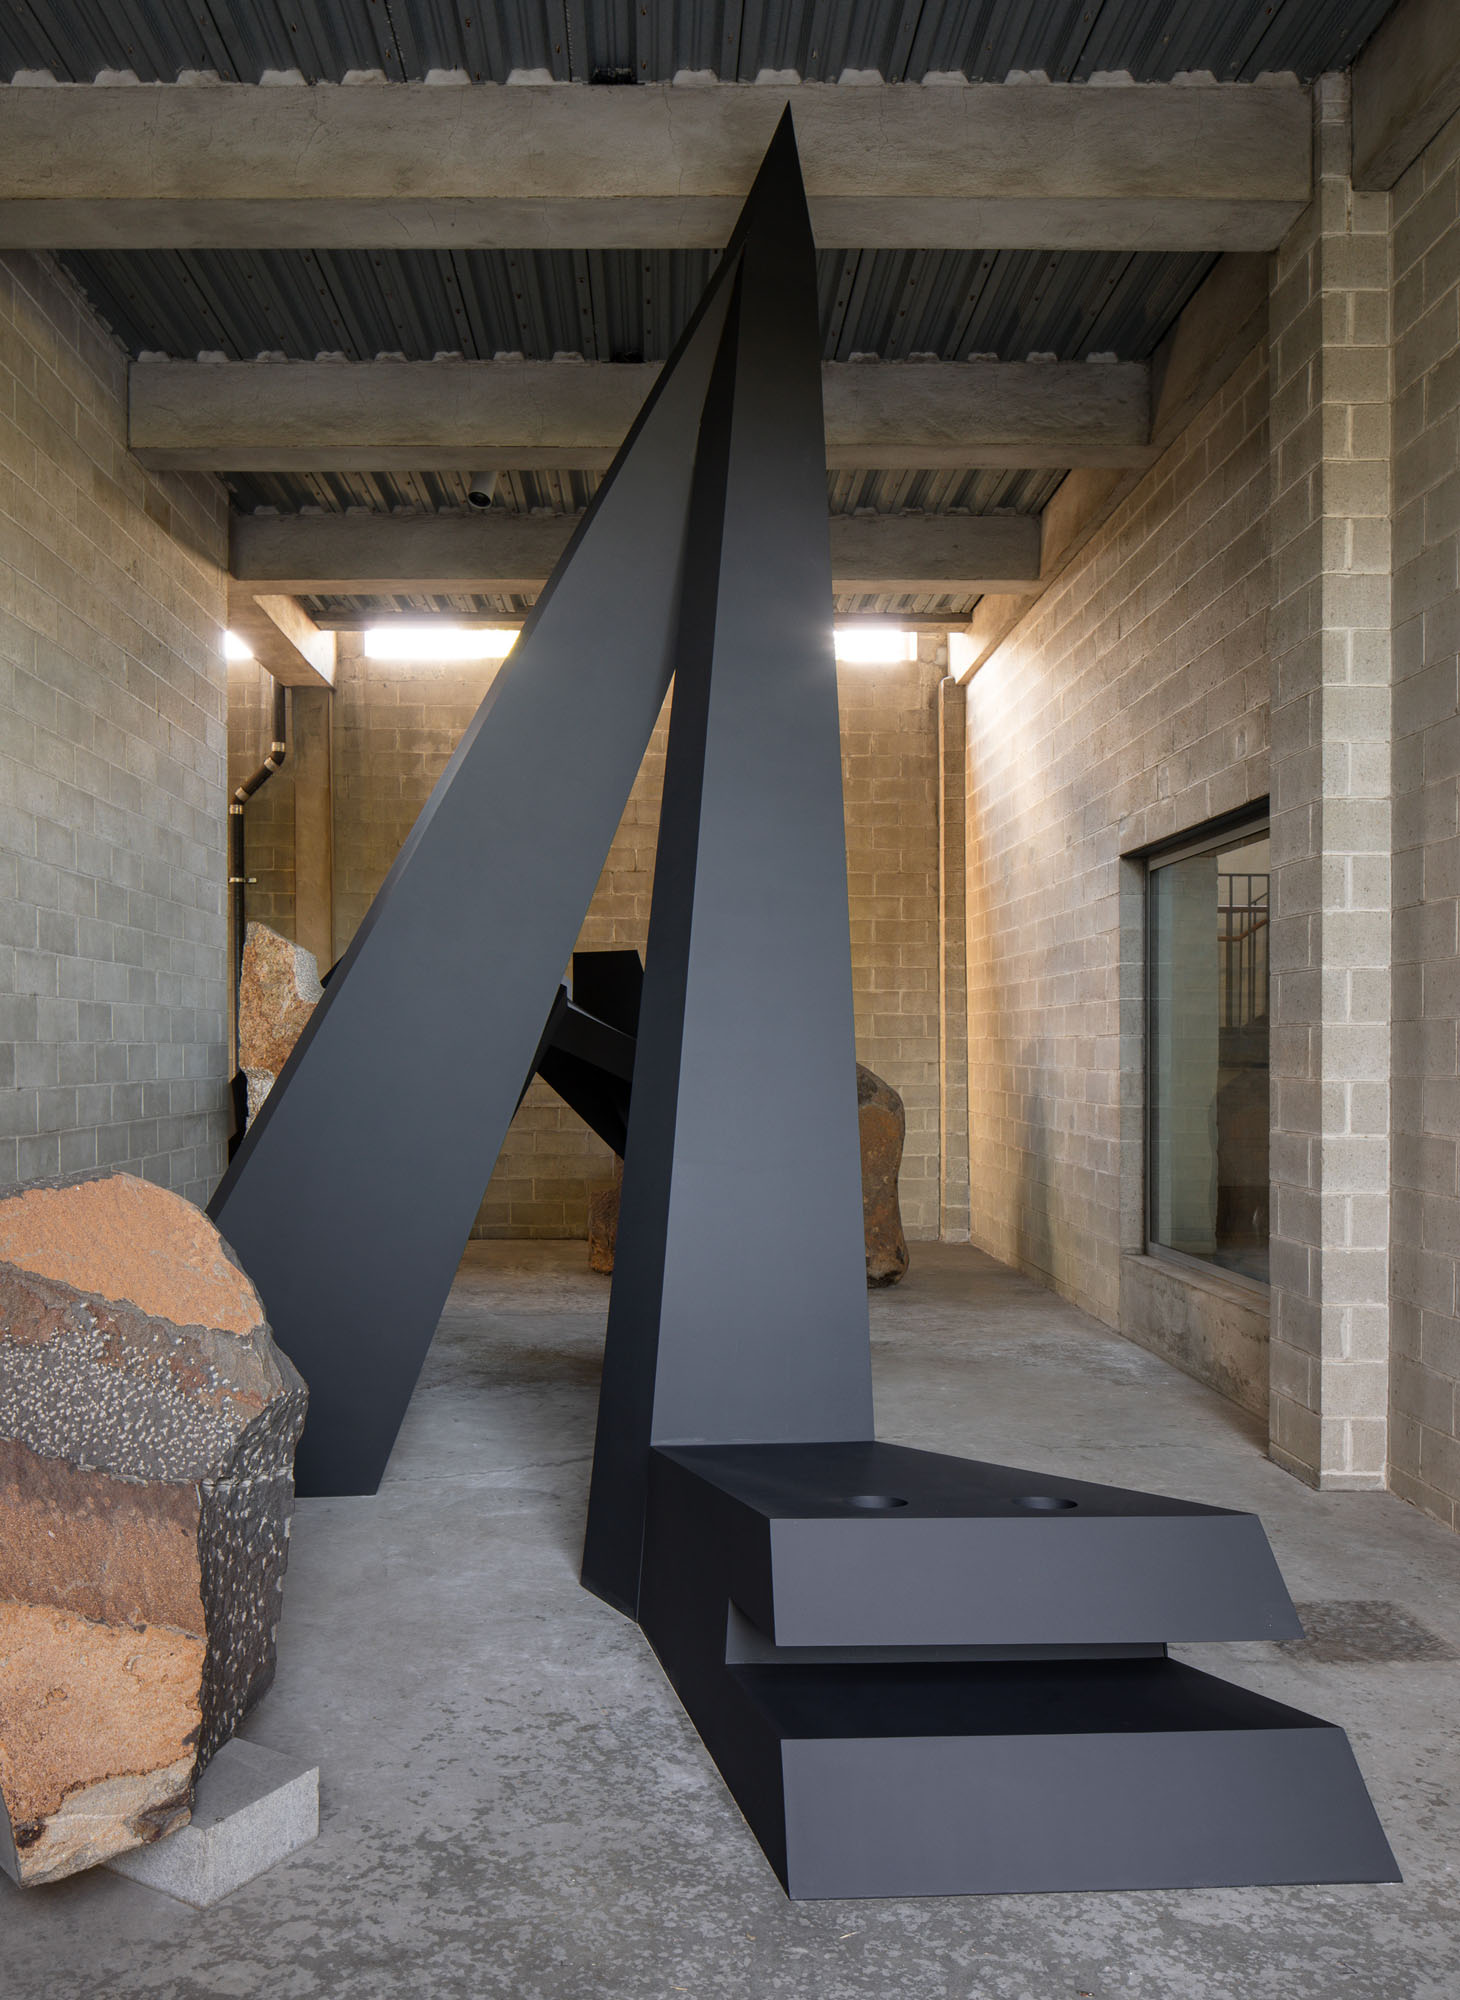 installation view of sculptures inside the noguchi museum